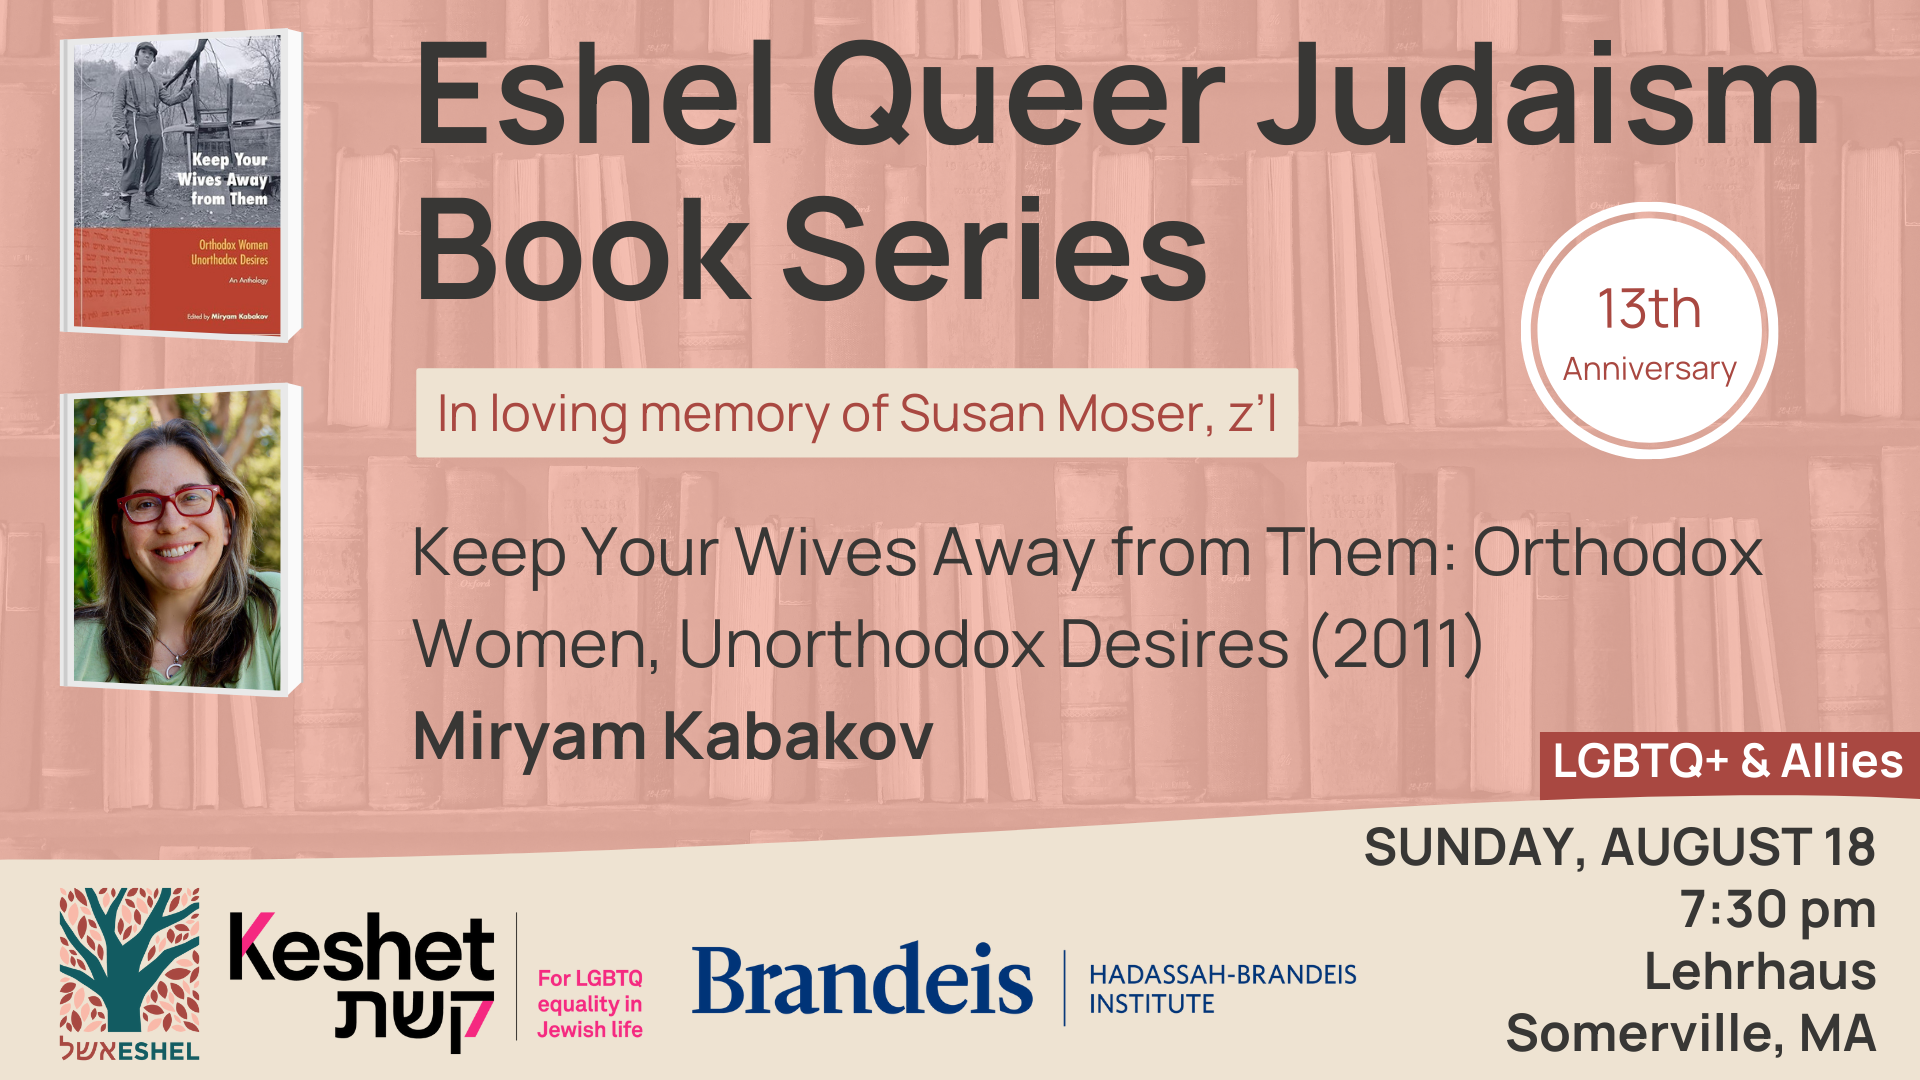 Eshel Queer Judaism Book Series - Keep Your Wives Away from Them: Orthodox Women, Unorthodox Desires (2011) Miryam Kabakov - SunDay, August 18 8:00 pm Lehrhaus - Somerville, MA